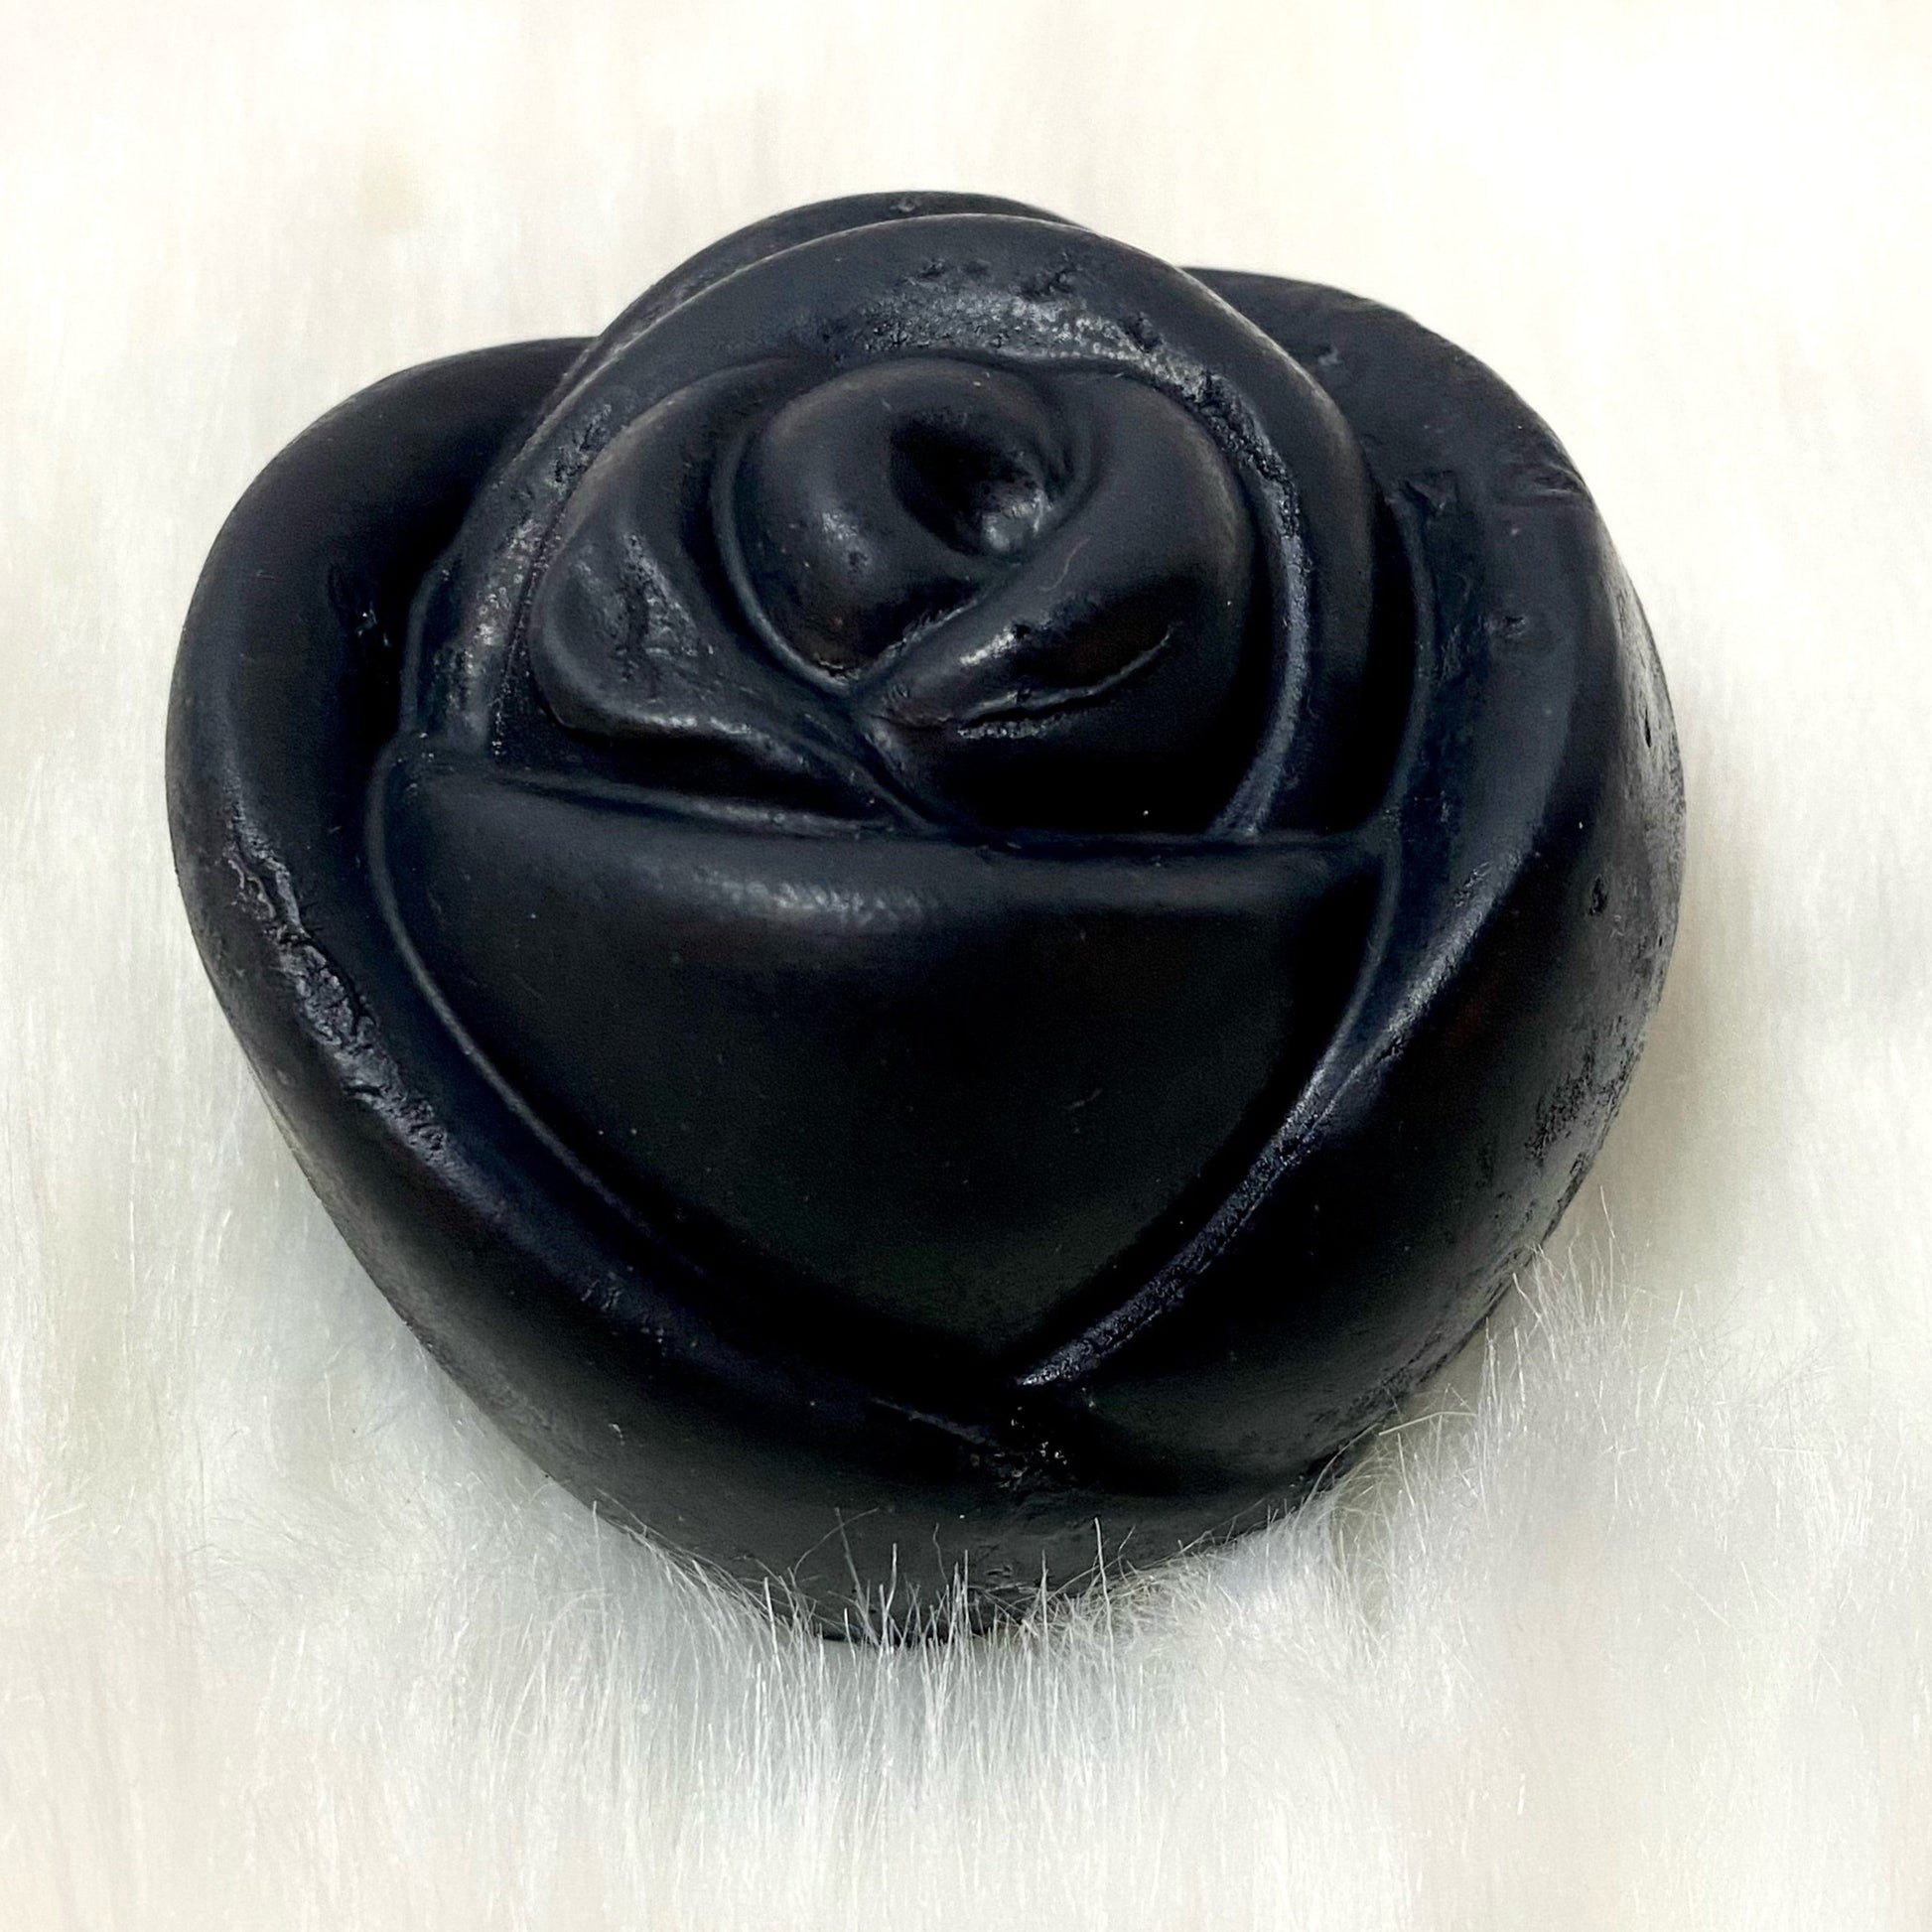 Black Rose Charcoal Soap